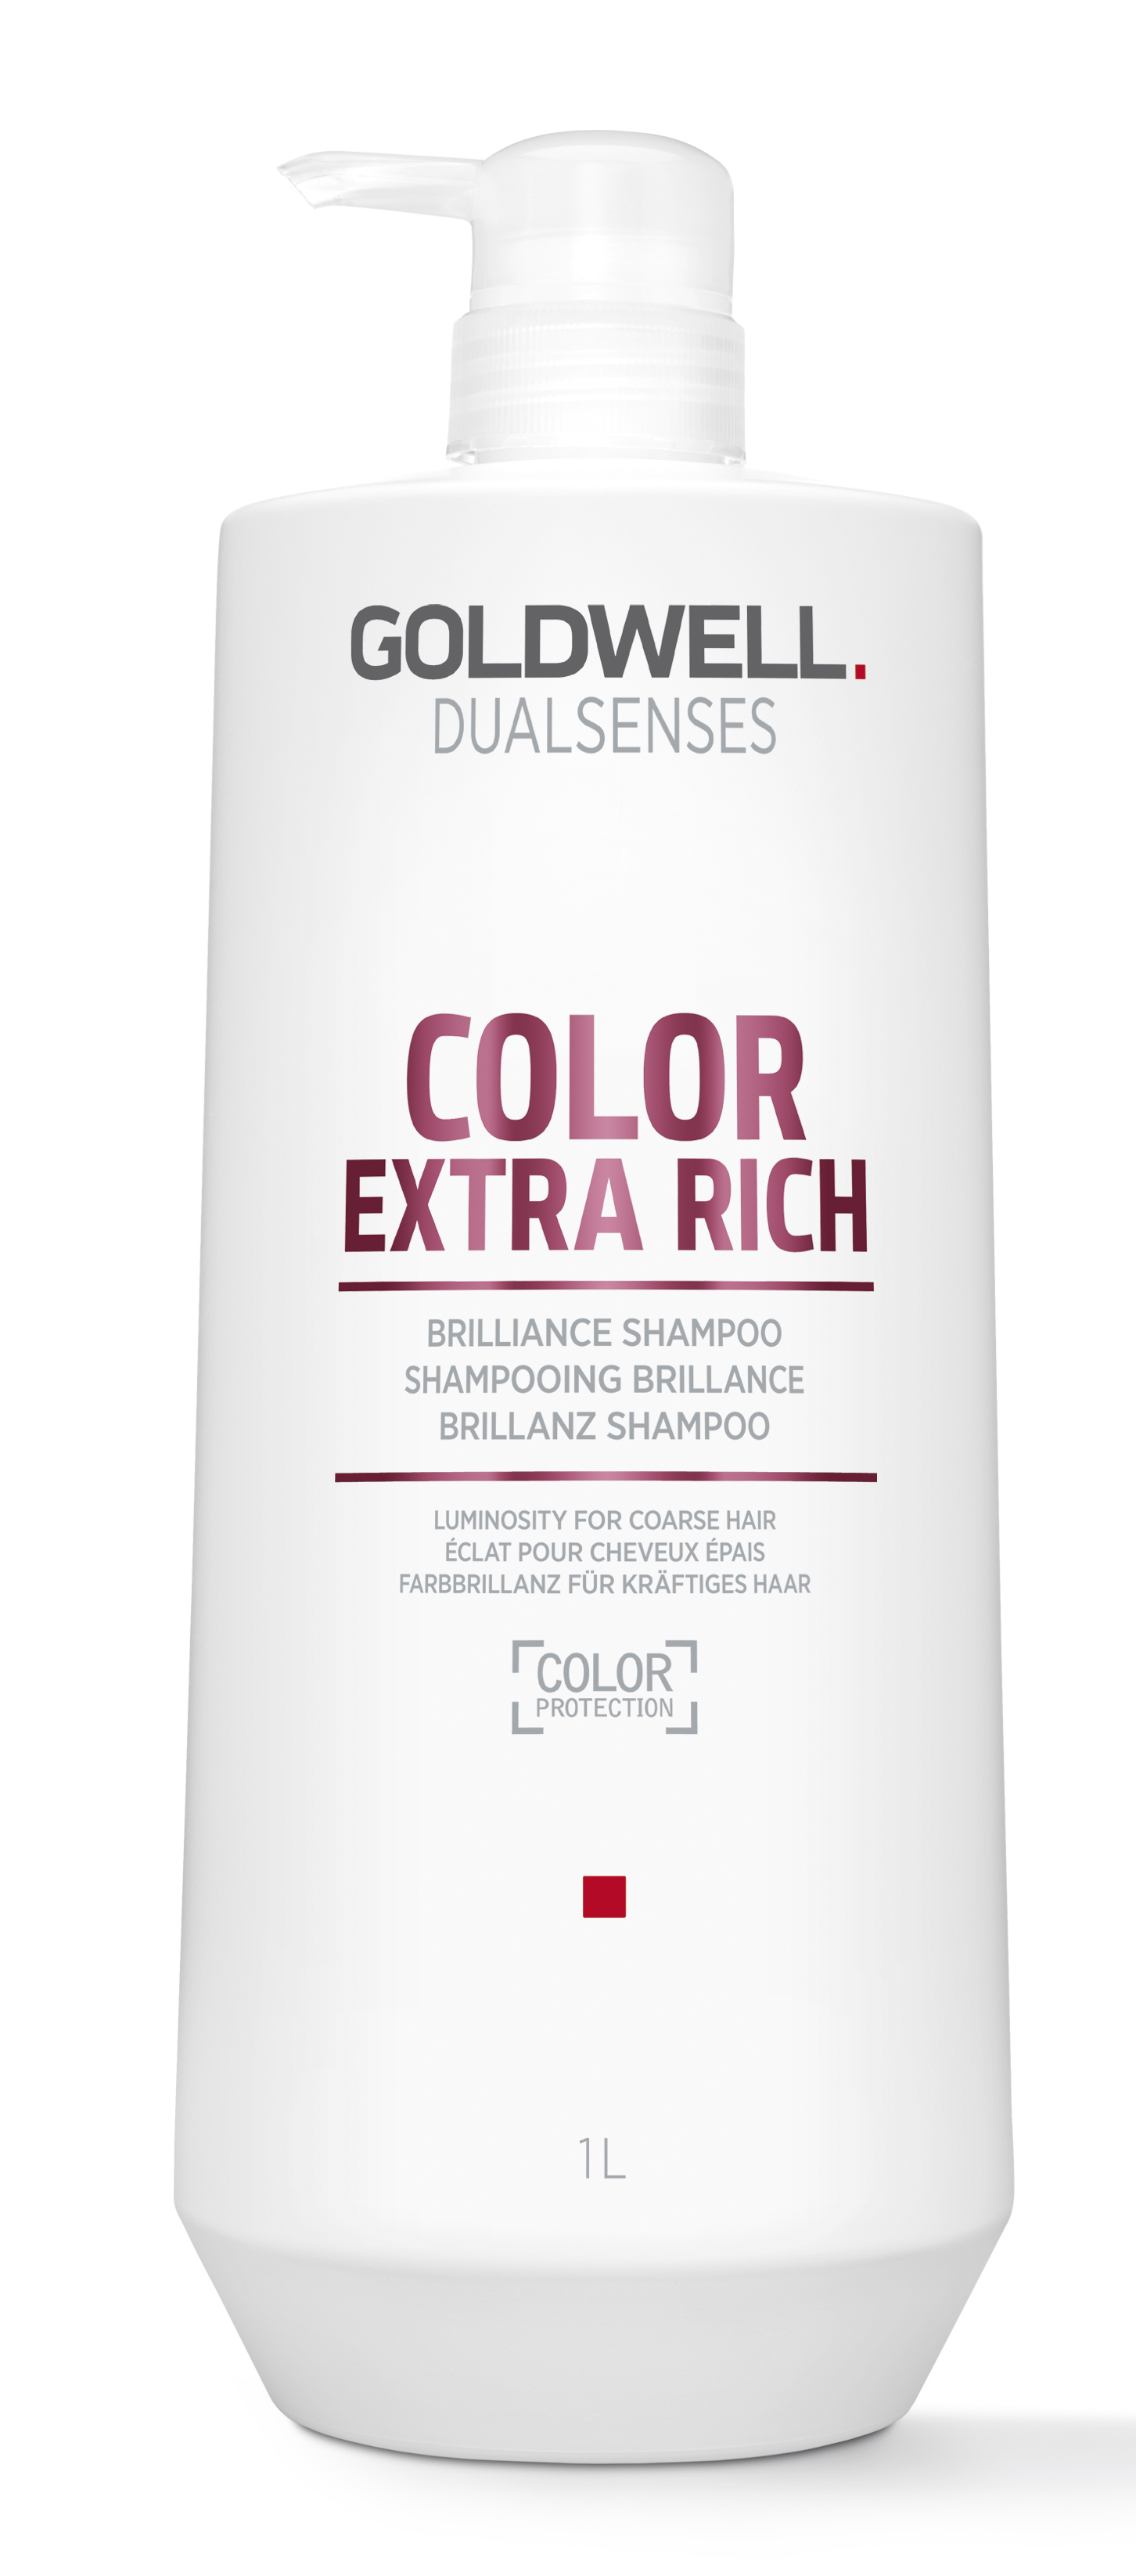 Dual Senses Color Extra Rich Shampoo